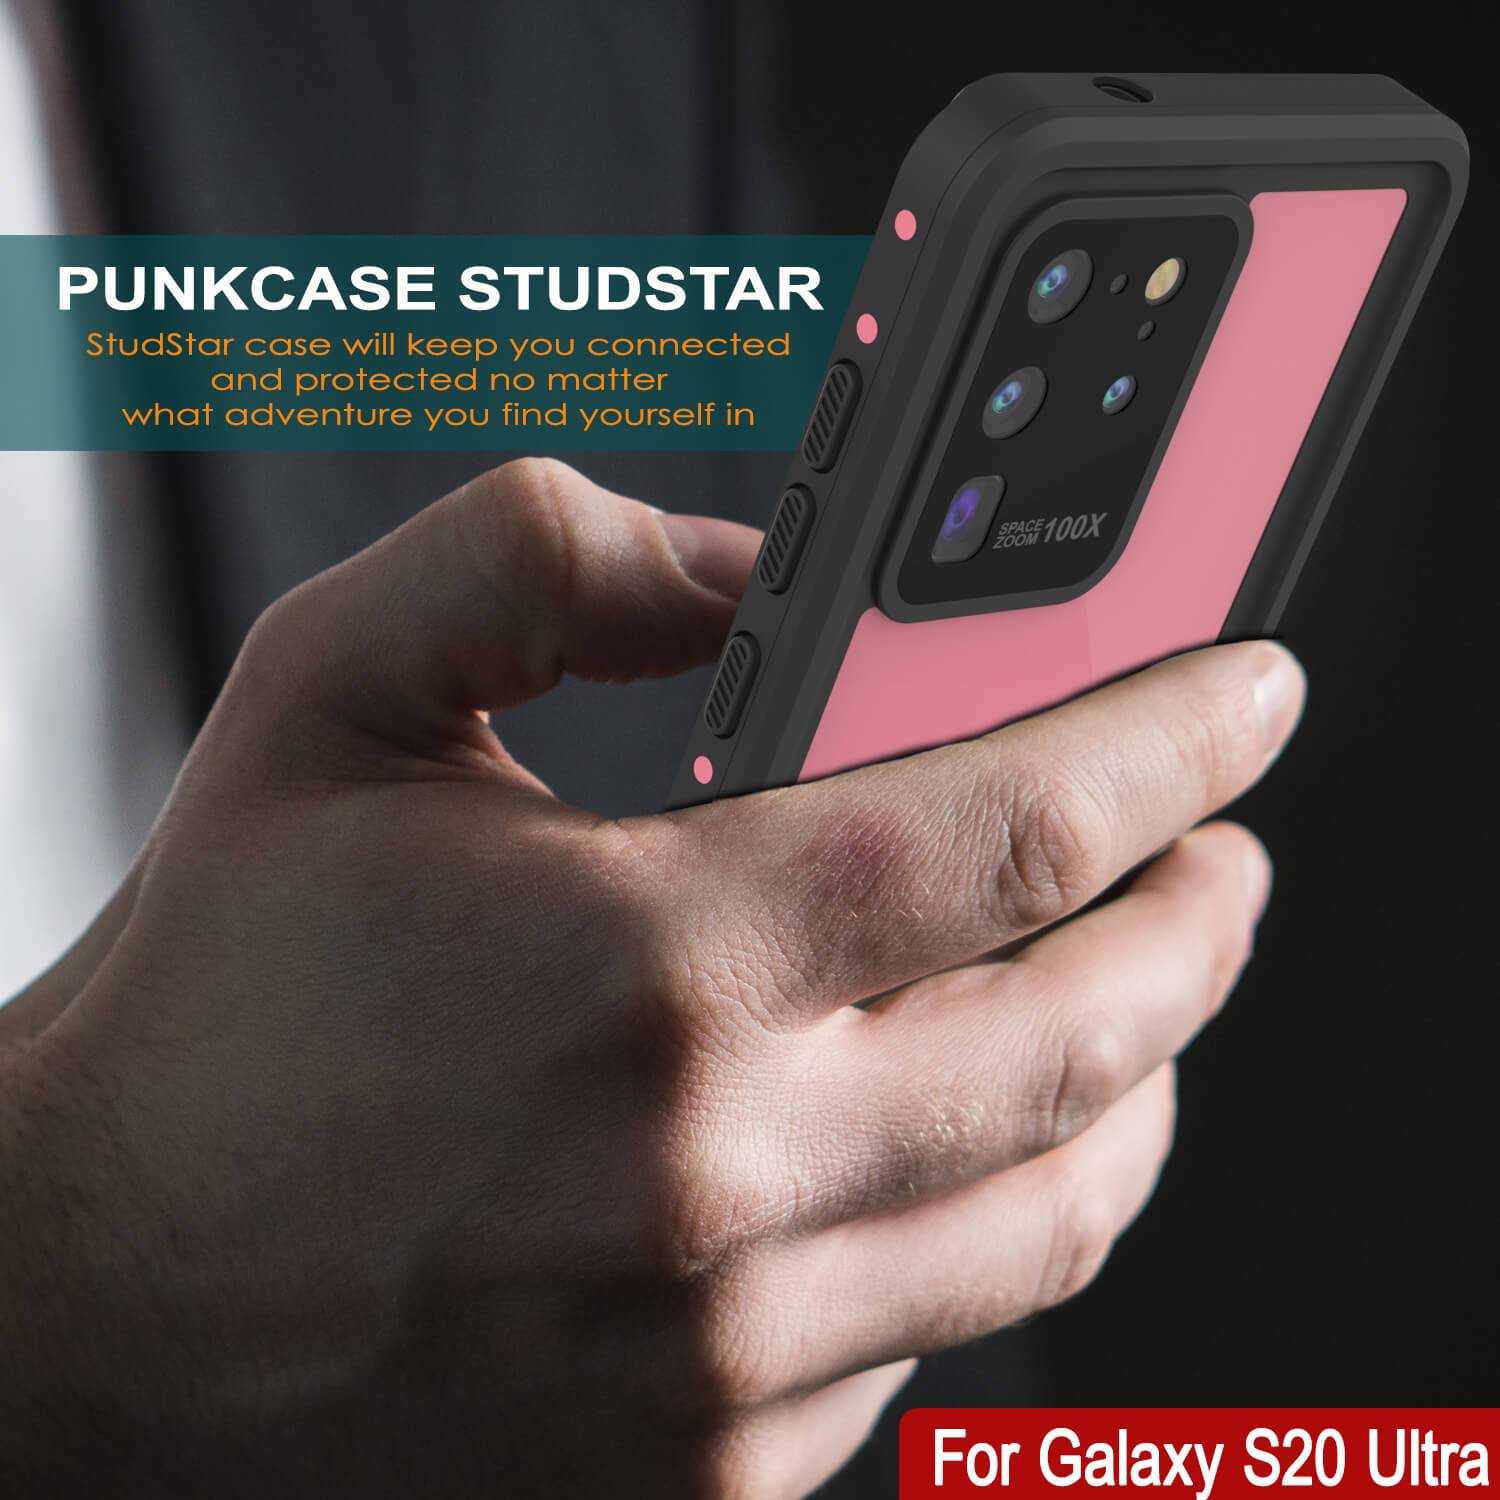 Galaxy S20 Ultra Waterproof Case PunkCase StudStar Pink Thin 6.6ft Underwater IP68 Shock/Snow Proof